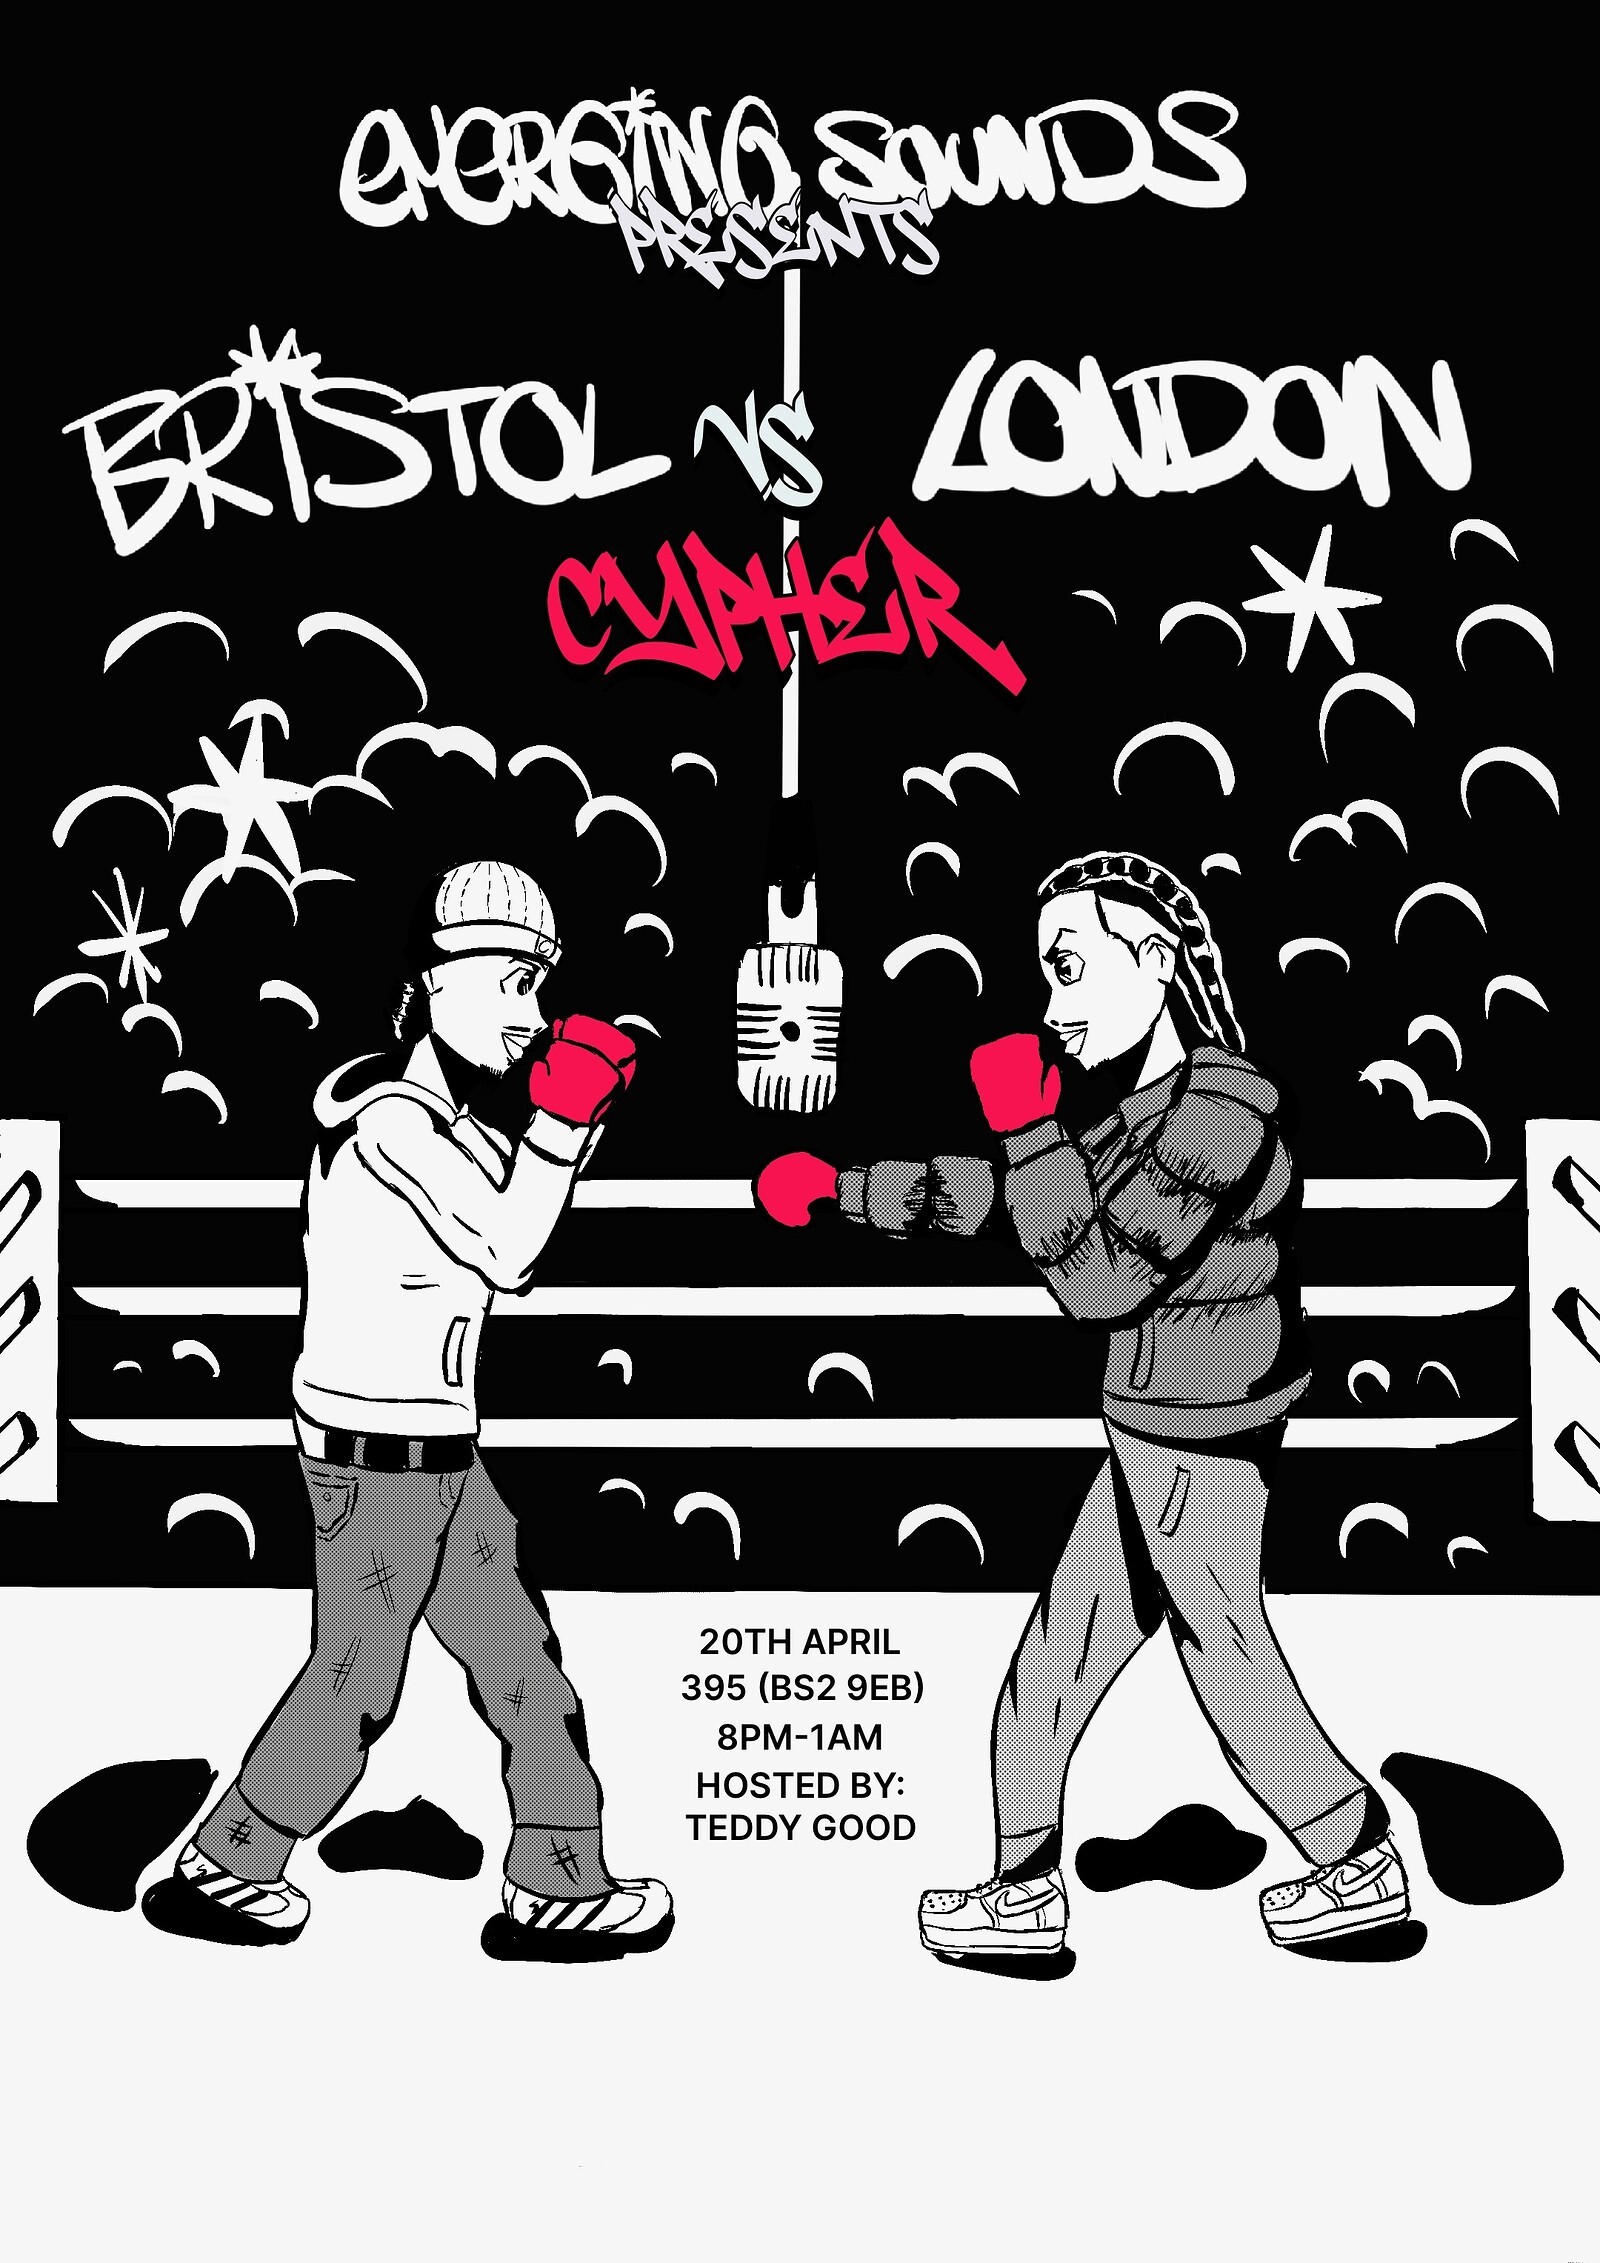 Bristol Vs London Underground Hip Hop Rap Battle at 395